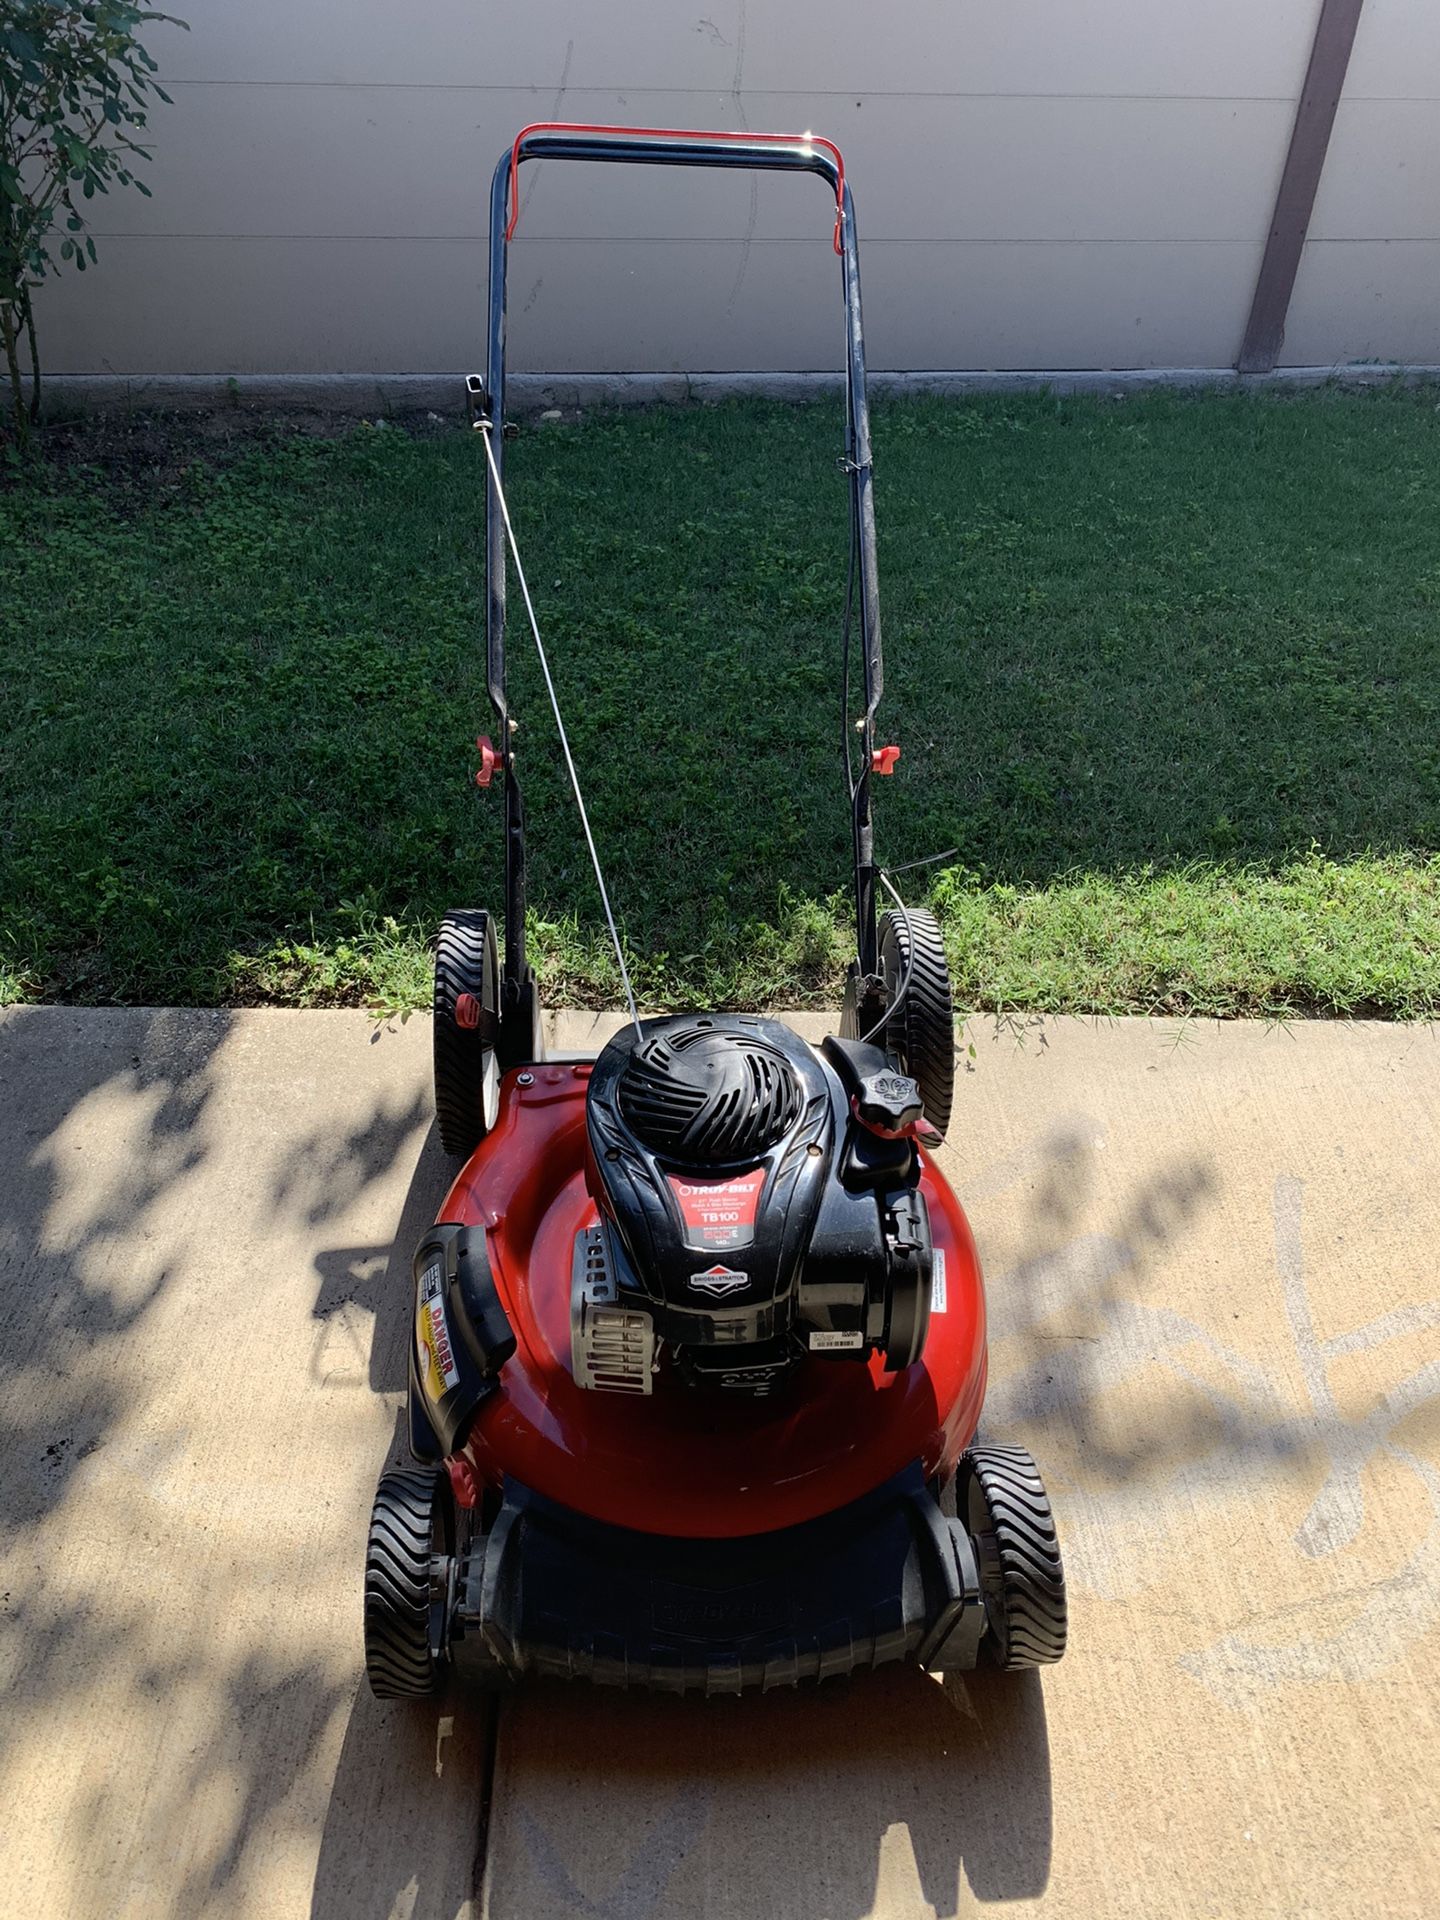 New Troy bilt lawn mower